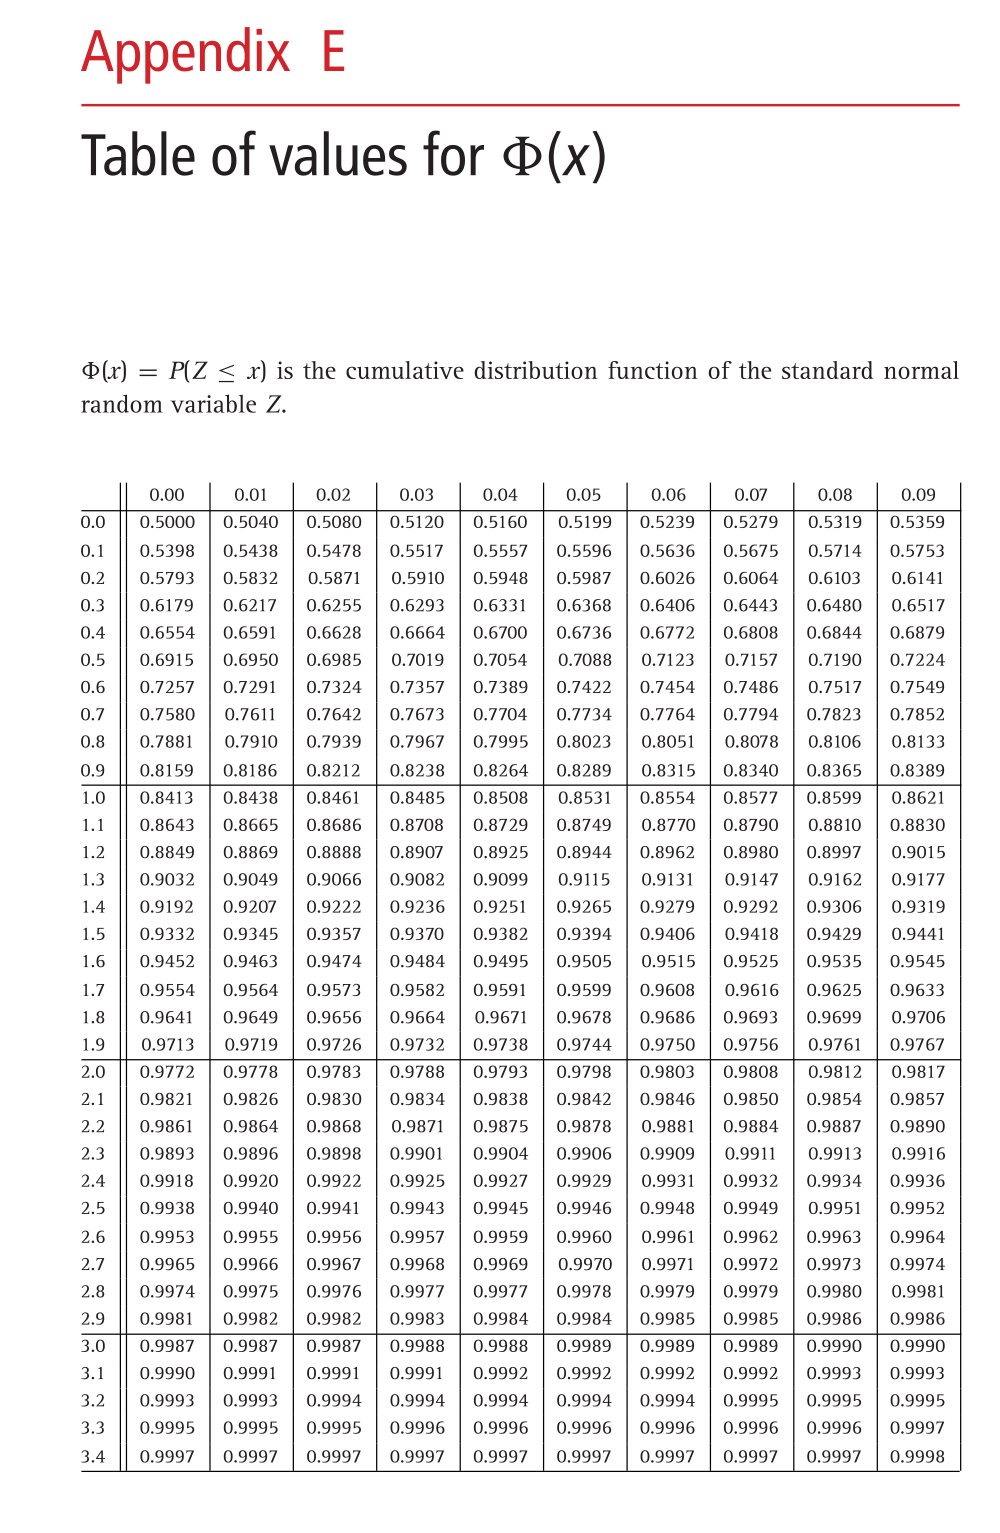 Appendix E
Table of values for (x)
Q(x) = P(Z ≤ x) is the cumulative distribution function of the standard normal
random variable Z.
0.0
0.1
0.2
0.3
0.4
0.5
0.6 0.7257 0.7291
0.7 0.7580 0.7611
0.8 0.7881 0.7910
0.9 0.8159 0.8186 0.8212
1.0 0.8413 0.8438 0.8461
1.1 0.8643 0.8665 0.8686
0.8888 0.8907
1.3 0.9032 0.9049 0.9066 0.9082
1.4 0.9192 0.9207 0.9222 0.9236
0.9370
1.2 0.8849 0.8869
1.5
0.9332 0.9345 0.9357
1.6
0.9452 0.9463 0.9474
0.9484
0.00
0.01
0.02
0.03
0.04 0.05
0.5000 0.5040 0.5080 0.5120 0.5160 0.5199
0.5398 0.5438 0.5478 0.5517 0.5557 0.5596
0.5793 0.5832 0.5871 0.5910 0.5948 0.5987
0.6179 0.6217 0.6255 0.6293 0.6331 0.6368 0.6406
0.6554 0.6591 0.6628 0.6664 0.6700
0.6915 0.6950 0.6985
0.7019 0.7054
0.7324 0.7357 0.7389
0.7642 0.7673 0.7704
0.7939 0.7967 0.7995
0.8238 0.8264
0.8485 0.8508
0.8708 0.8729
0.8925
0.9099
0.9251
0.9382
0.9495
0.9582
0.9591
0.9656 0.9664
0.9671
1.7
1.8 0.9641 0.9649
0.9719
0.9778
0.9633
0.9693 0.9699 0.9706
0.9761 0.9767
0.9812 0.9817
1.9 0.9713
0.9726 0.9732
0.9738 0.9744
0.9750 0.9756
2.0 0.9772
0.9783
0.9788
0.9793
0.9798 0.9803 0.9808
2.1 0.9821 0.9826
0.9830
0.9834
0.9838
2.2
0.9861 0.9864
0.9868
0.9871
0.9875
0.9842 0.9846 0.9850 0.9854 0.9857
0.9878 0.9881 0.9884 0.9887
0.9906 0.9909 0.9911 0.9913
0.9890
0.9893 0.9896 0.9898
0.9901 0.9904
0.9916
2.3
2.4 0.9918 0.9920
0.9925
0.9927
0.9929 0.9931 0.9932 0.9934
0.9936
0.9922
0.9938 0.9940 0.9941
2.5
0.9943
0.9945
0.9946
0.9948 0.9949 0.9951
0.9952
2.6
0.9957
0.9959
0.9960
0.9961 0.9962 0.9963 0.9964
2.7
0.9953 0.9955 0.9956
0.9965 0.9966 0.9967
0.9974 0.9975 0.9976
0.9968 0.9969
0.9970
0.9972 0.9973 0.9974
0.9971
0.9979 0.9979 0.9980 0.9981
2.8
0.9977 0.9977
0.9983 0.9984
2.9
0.9981 0.9982 0.9982
3.0
0.9978
0.9984 0.9985 0.9985 0.9986 0.9986
0.9987 0.9987 0.9987 0.9988 0.9988 0.9989 0.9989
0.9989 0.9990 0.9990
0.9990 0.9991 0.9991 0.9991 0.9992 0.9992 0.9992 0.9992 0.9993 0.9993
3.2 0.9993 0.9993 0.9994 0.9994 0.9994 0.9994 0.9994 0.9995 0.9995 0.9995
3.3 0.9995 0.9995 0.9995 0.9996 0.9996 0.9996 0.9996 0.9996 0.9996
0.9997
3.4 0.9997 0.9997 0.9997 0.9997 0.9997 0.9997
3.1
0.9997 0.9997 0.9997 0.9998
0.06
0.09
0.07
0.08
0.5279 0.5319 0.5359
0.5239
0.5636
0.6026 0.6064 0.6103
0.5675 0.5714
0.5753
0.6141
0.6443 0.6480
0.6517
0.6808 0.6844
0.6879
0.6736 0.6772
0.7088
0.7123 0.7157 0.7190 0.7224
0.7422 0.7454 0.7486 0.7517 0.7549
0.7734
0.7764
0.7852
0.8023 0.8051
0.8289 0.8315
0.8531 0.8554 0.8577 0.8599
0.7794 0.7823
0.8078 0.8106
0.8133
0.8340 0.8365
0.8389
0.8621
0.8749
0.8770 0.8790 0.8810
0.8830
0.8944
0.8962 0.8980 0.8997 0.9015
0.9115
0.9147 0.9162 0.9177
0.9131
0.9279 0.9292 0.9306 0.9319
0.9265
0.9394
0.9406 0.9418 0.9429
0.9441
0.9505
0.9515 0.9525 0.9535 0.9545
0.9554 0.9564 0.9573
0.9608 0.9616 0.9625
0.9599
0.9678 0.9686